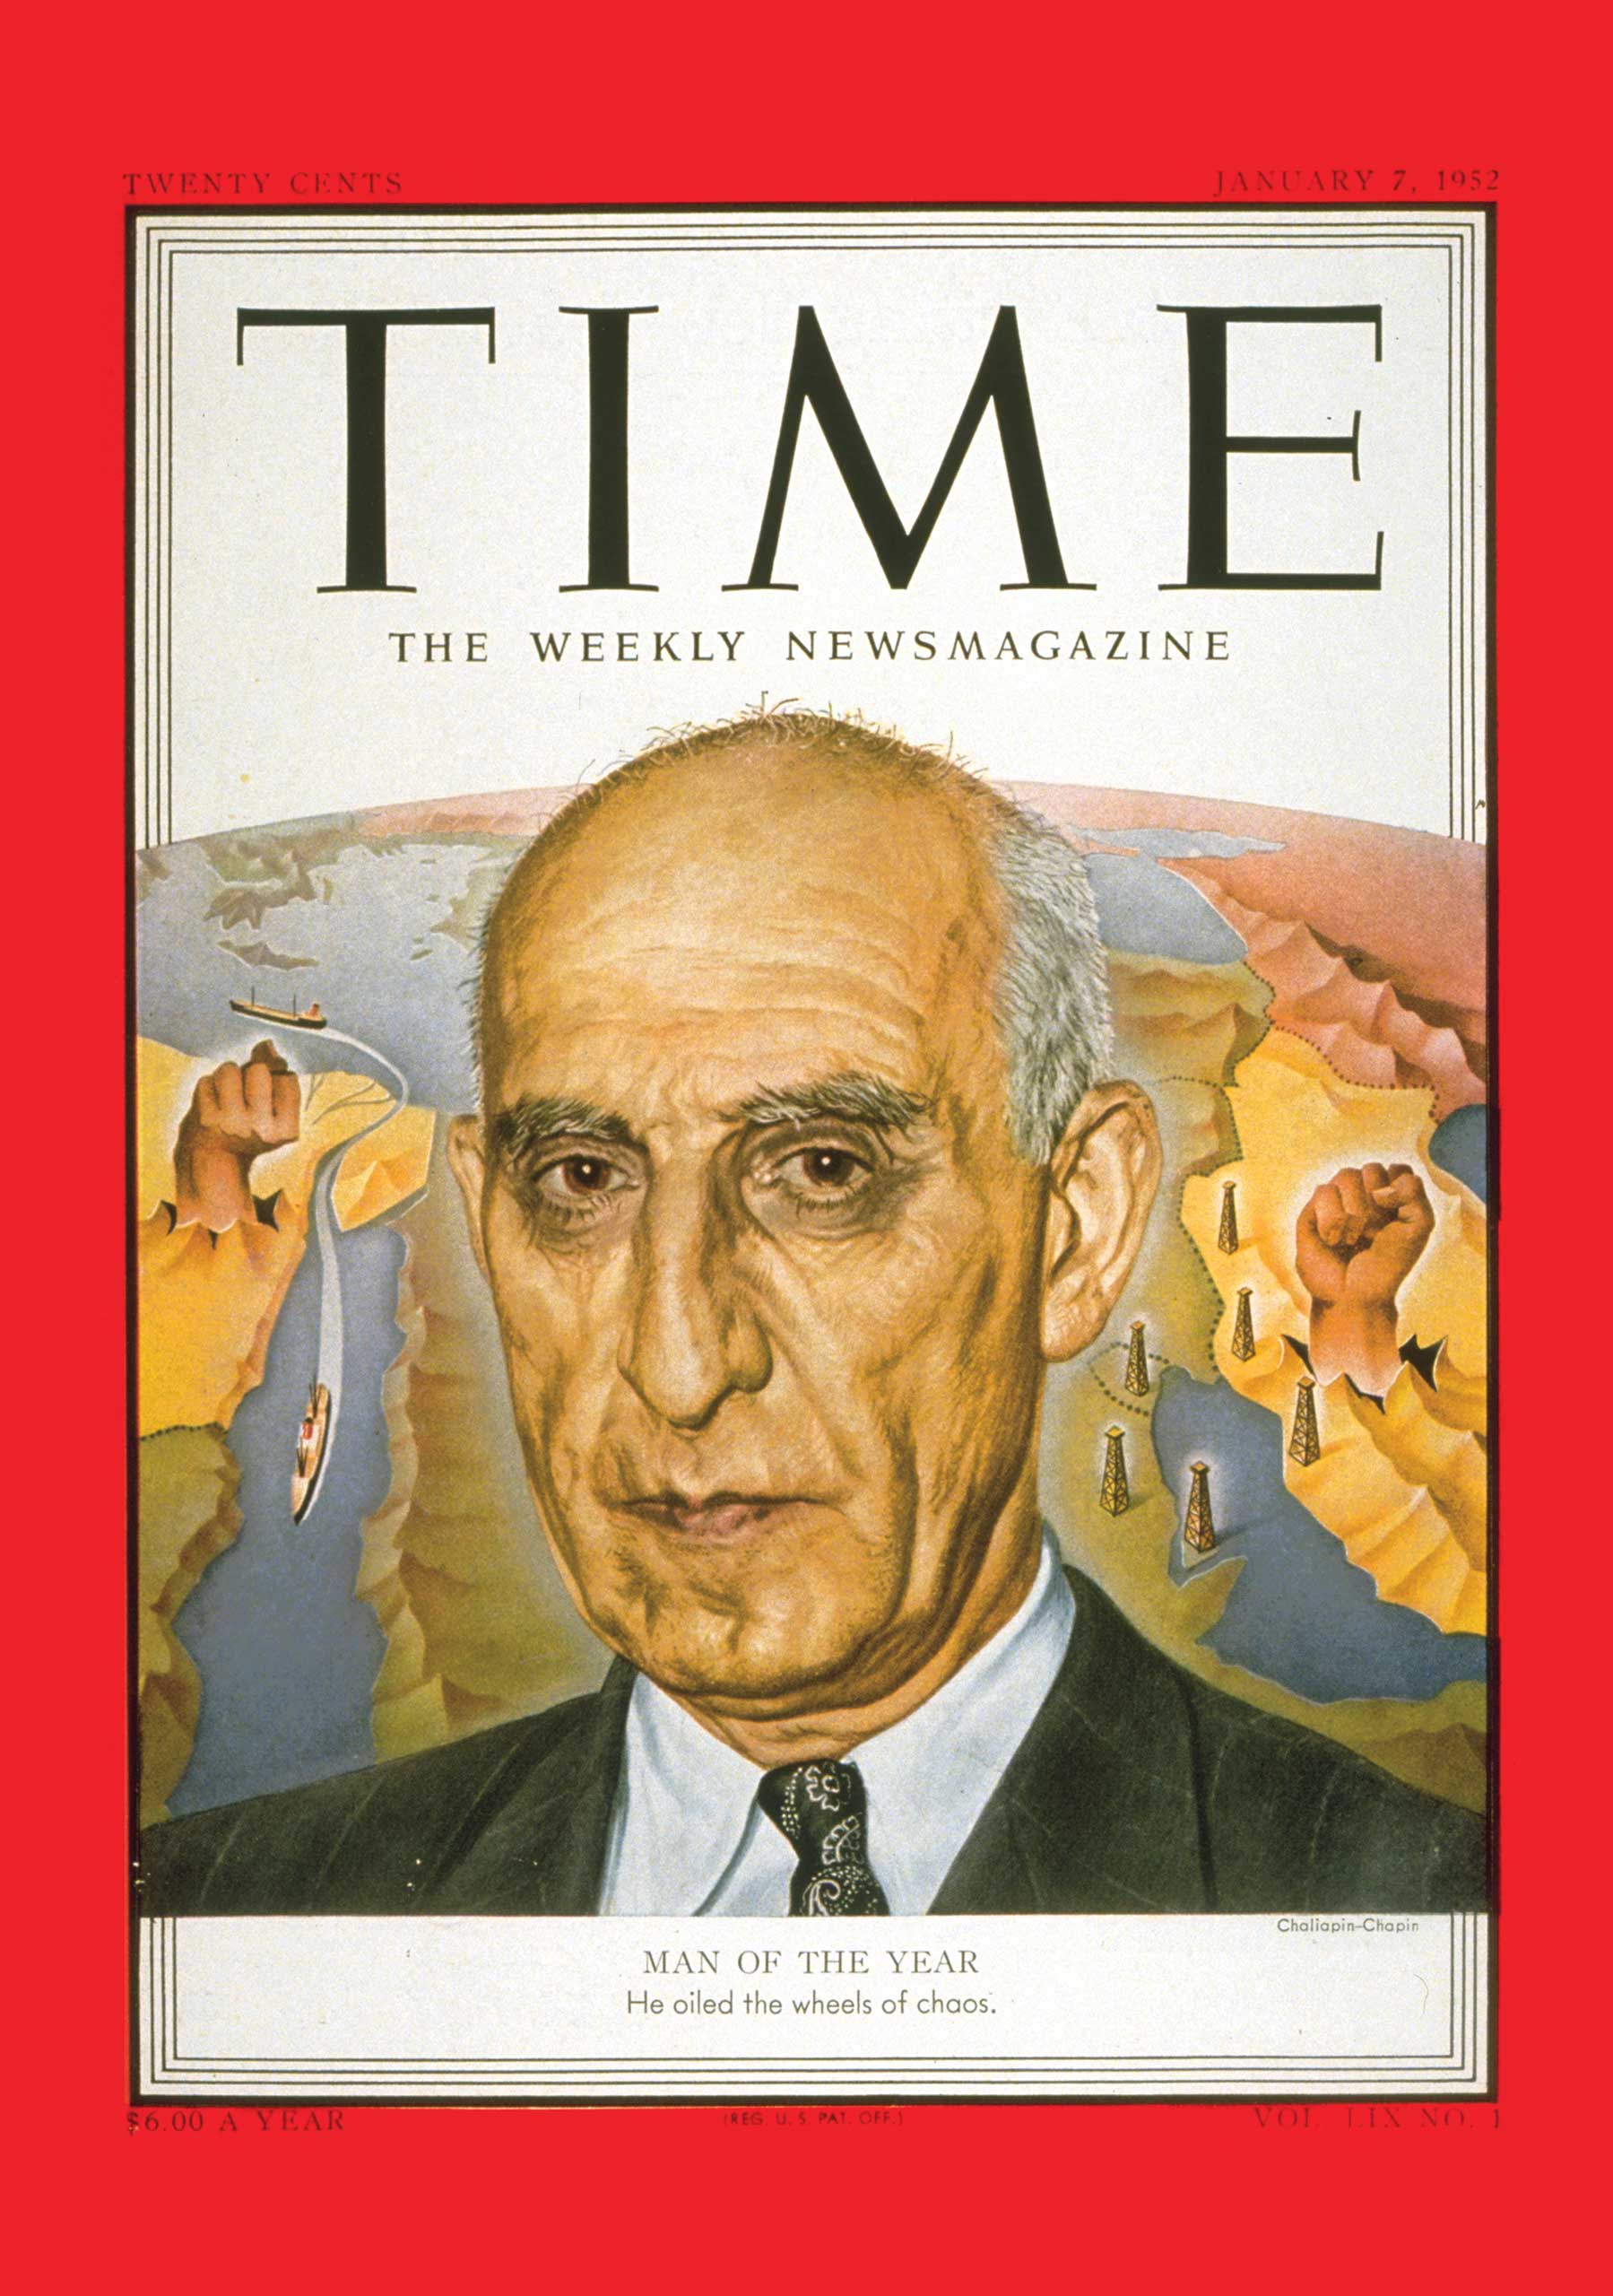 1951: Mohammad Mossadegh